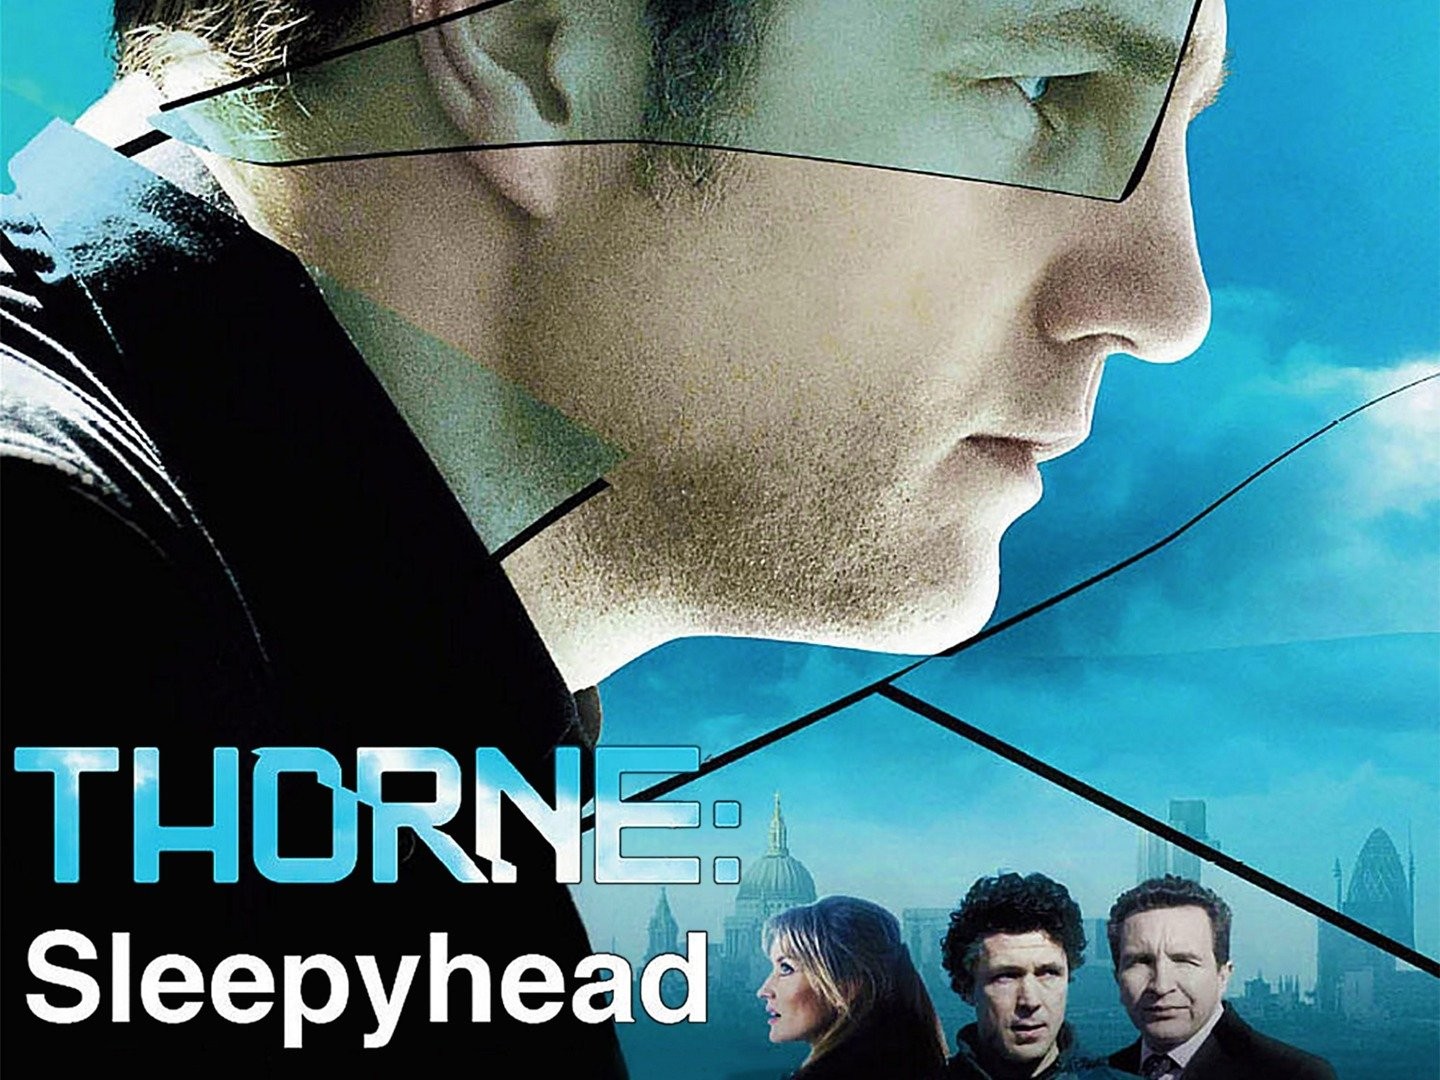 Thorne (TV series) - Wikipedia